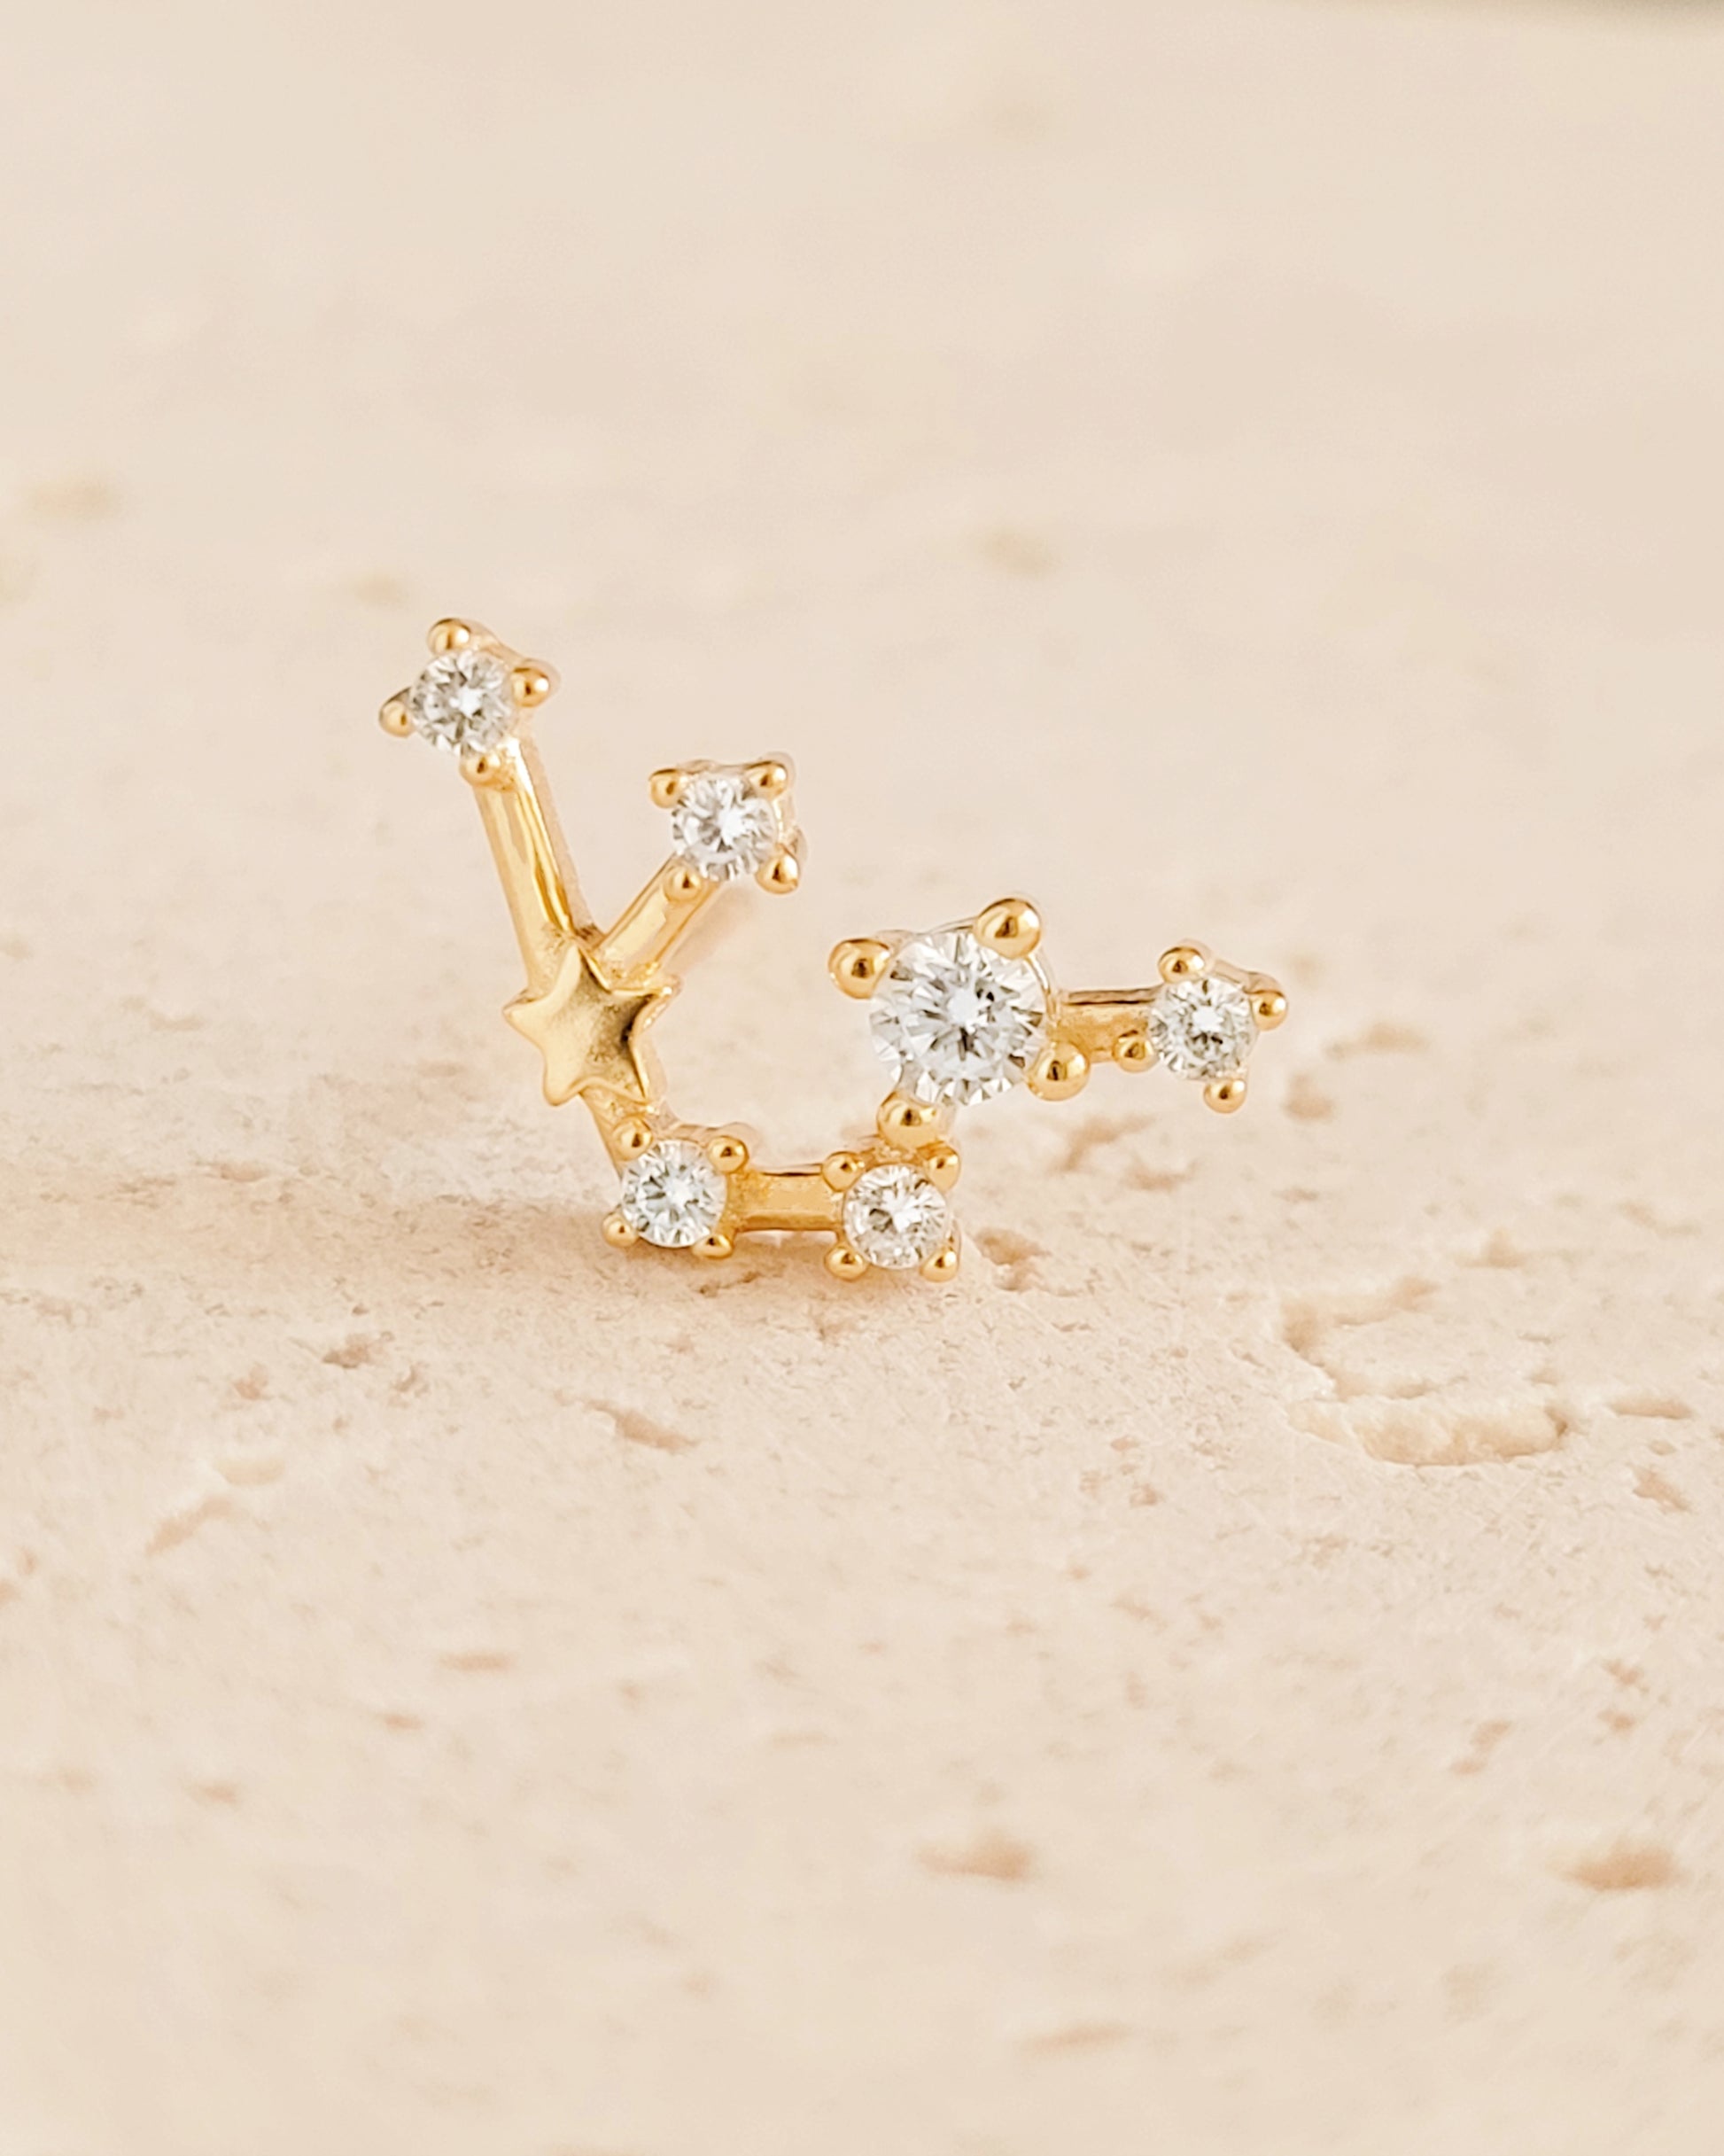 Starry Constellation Earring Aquarius Zodiac jewellery for women